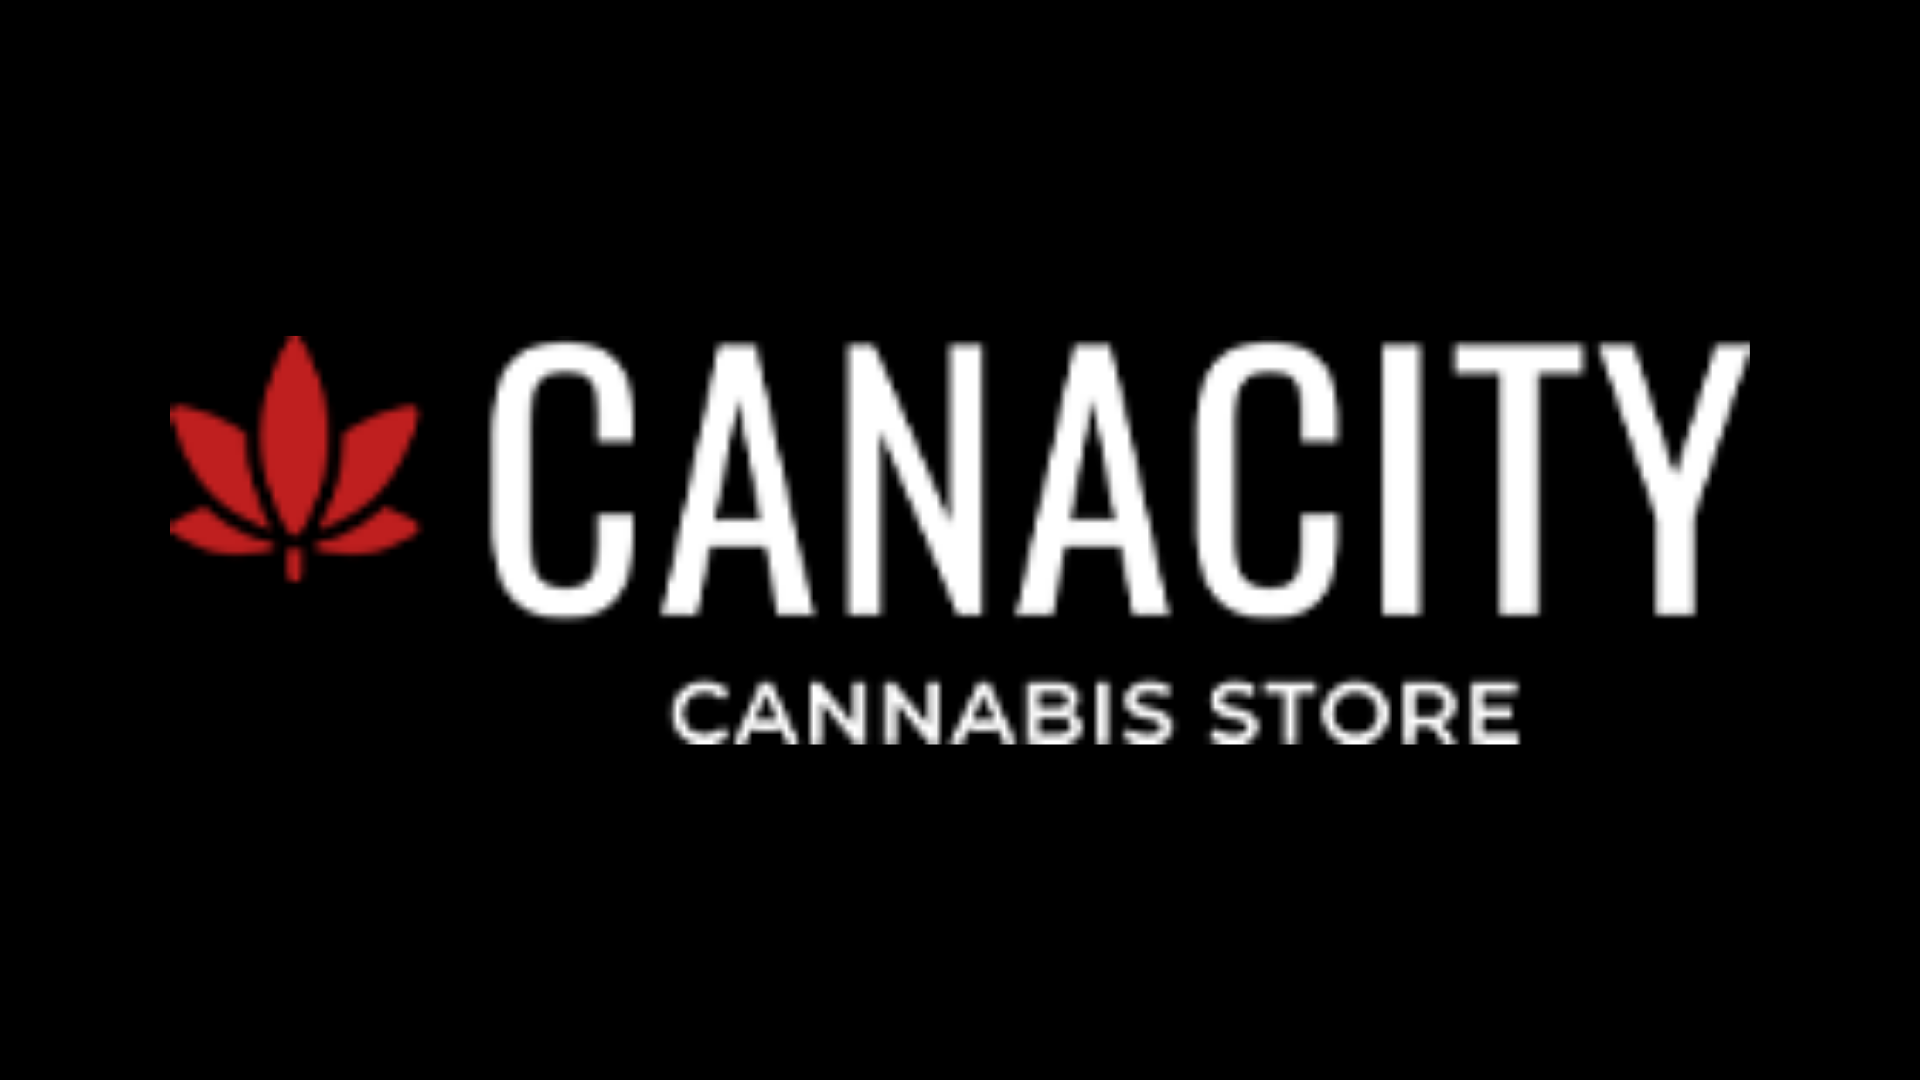 Cannabis Store Canacity Cannabis Store - Winnipeg - 0